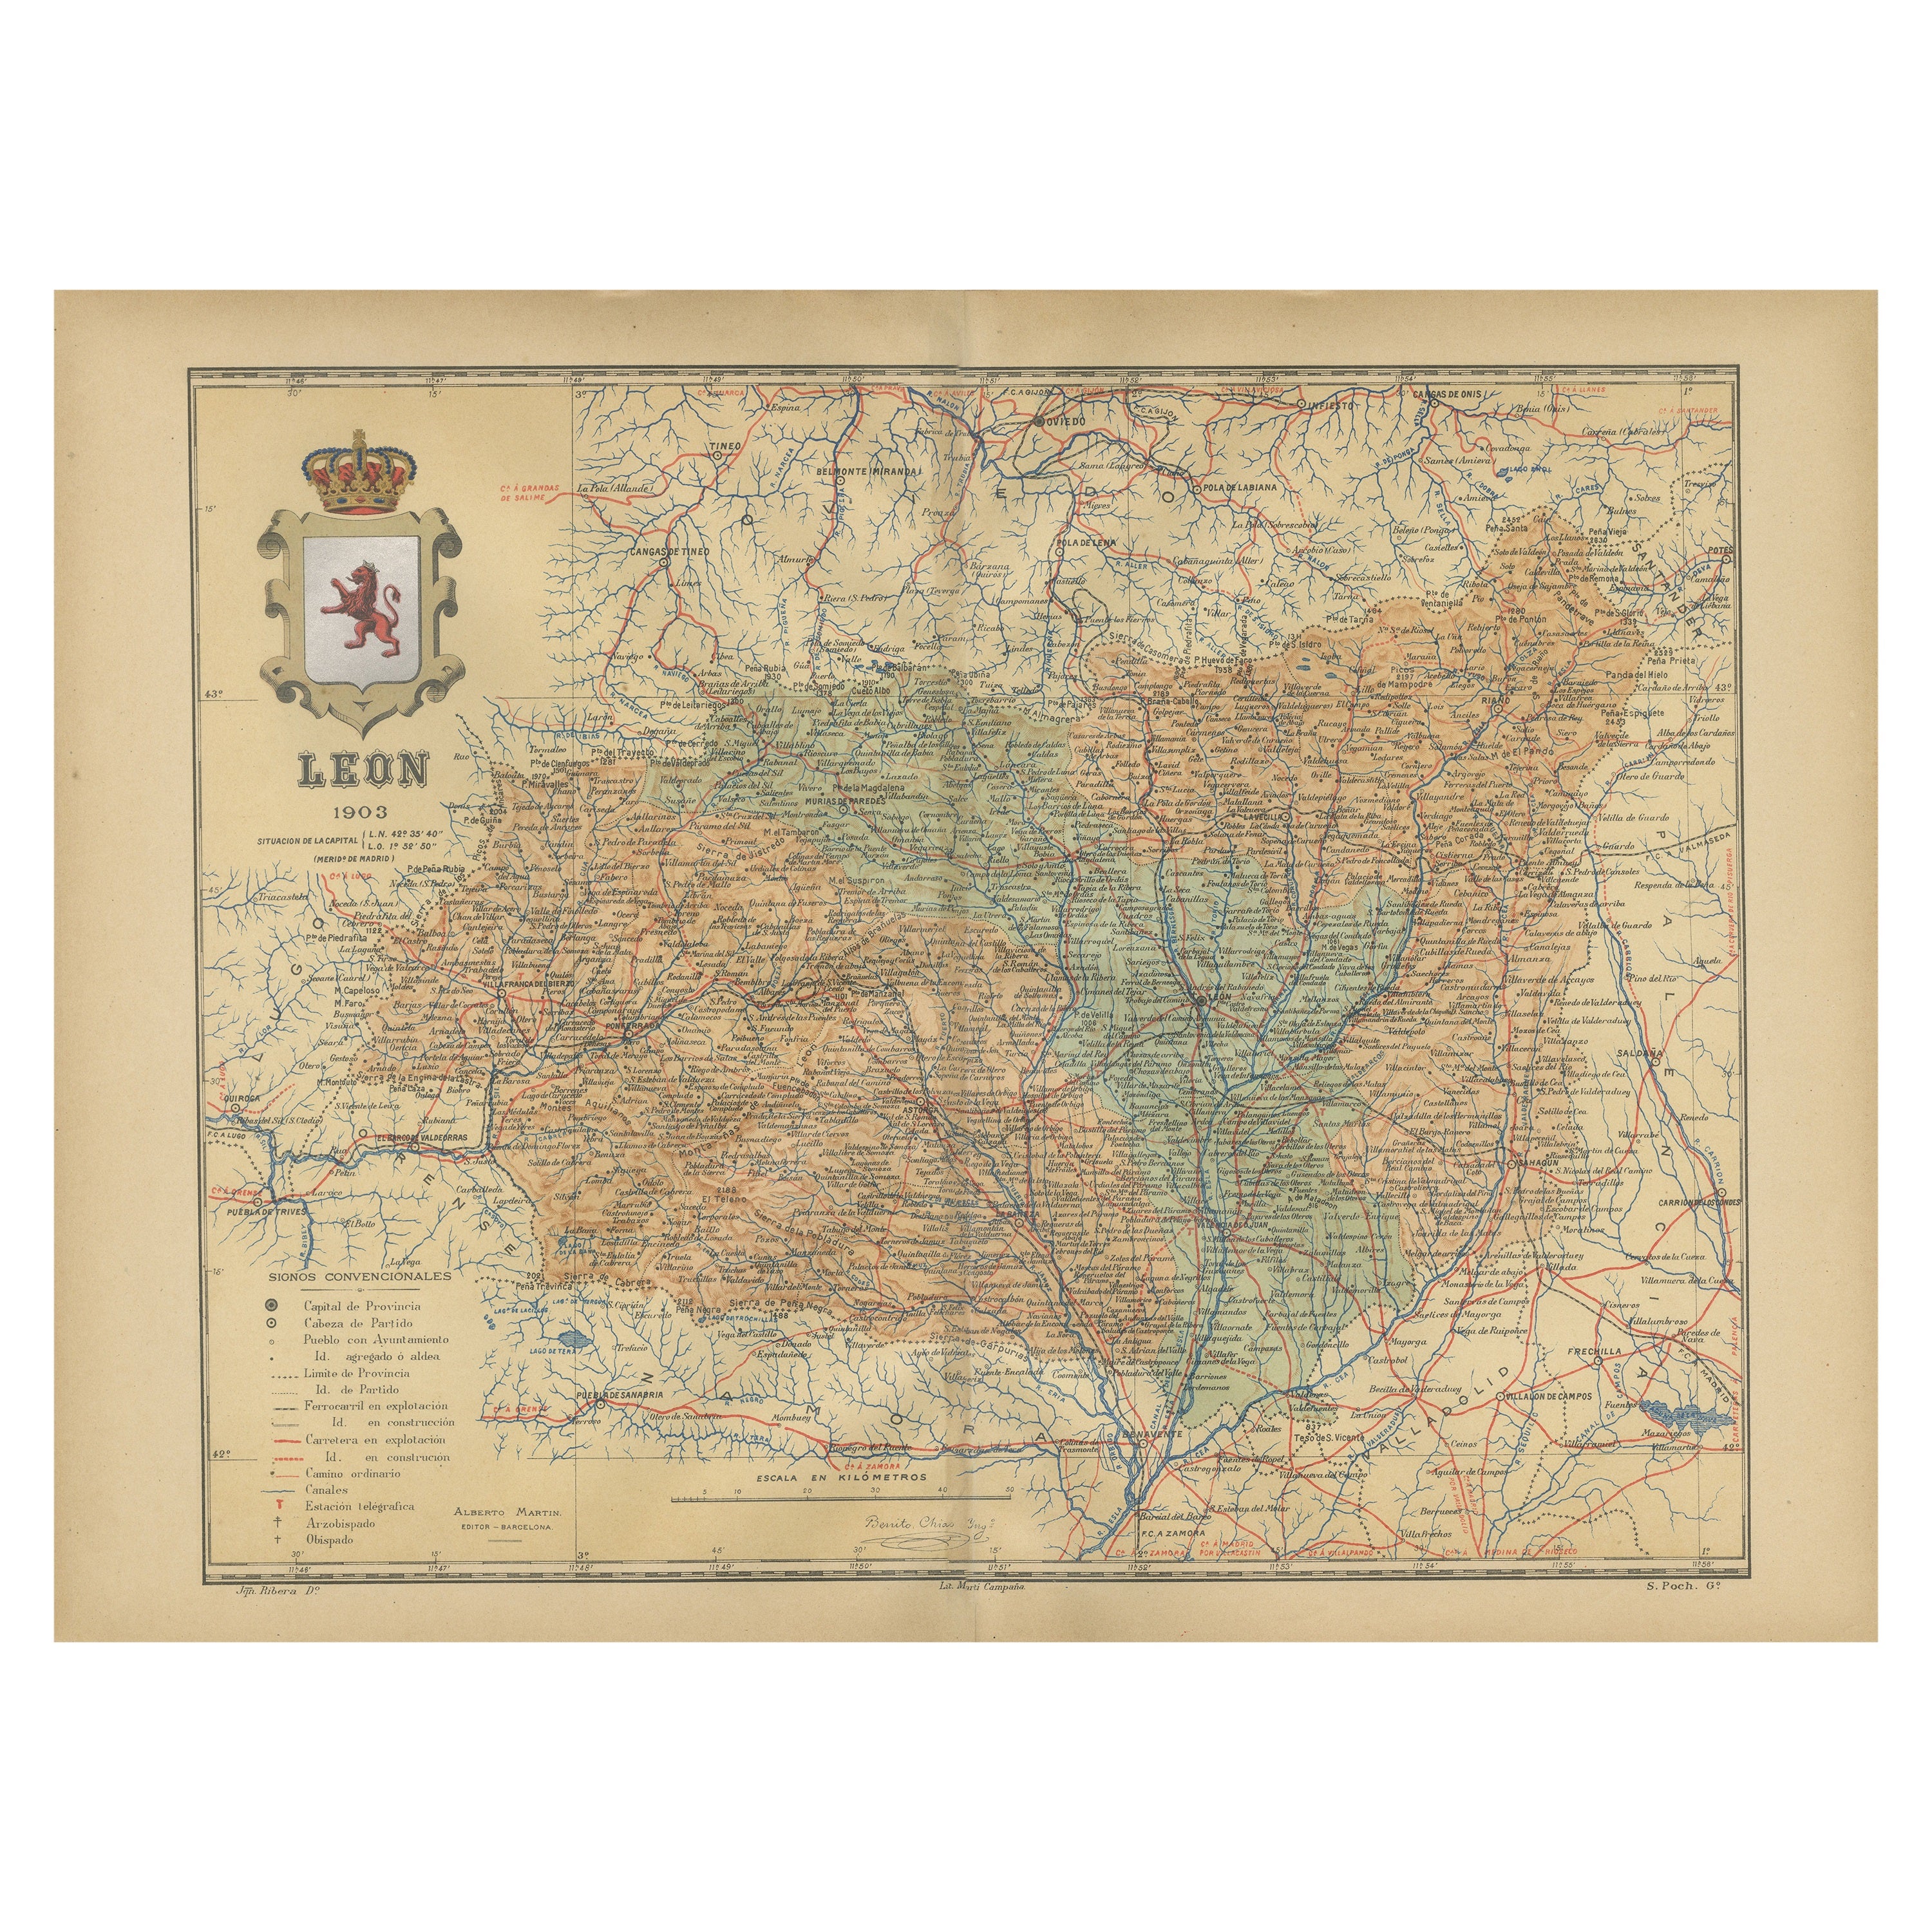 León 1903: A Cartographic Detailing of Castilla y León's Mountainous Province For Sale